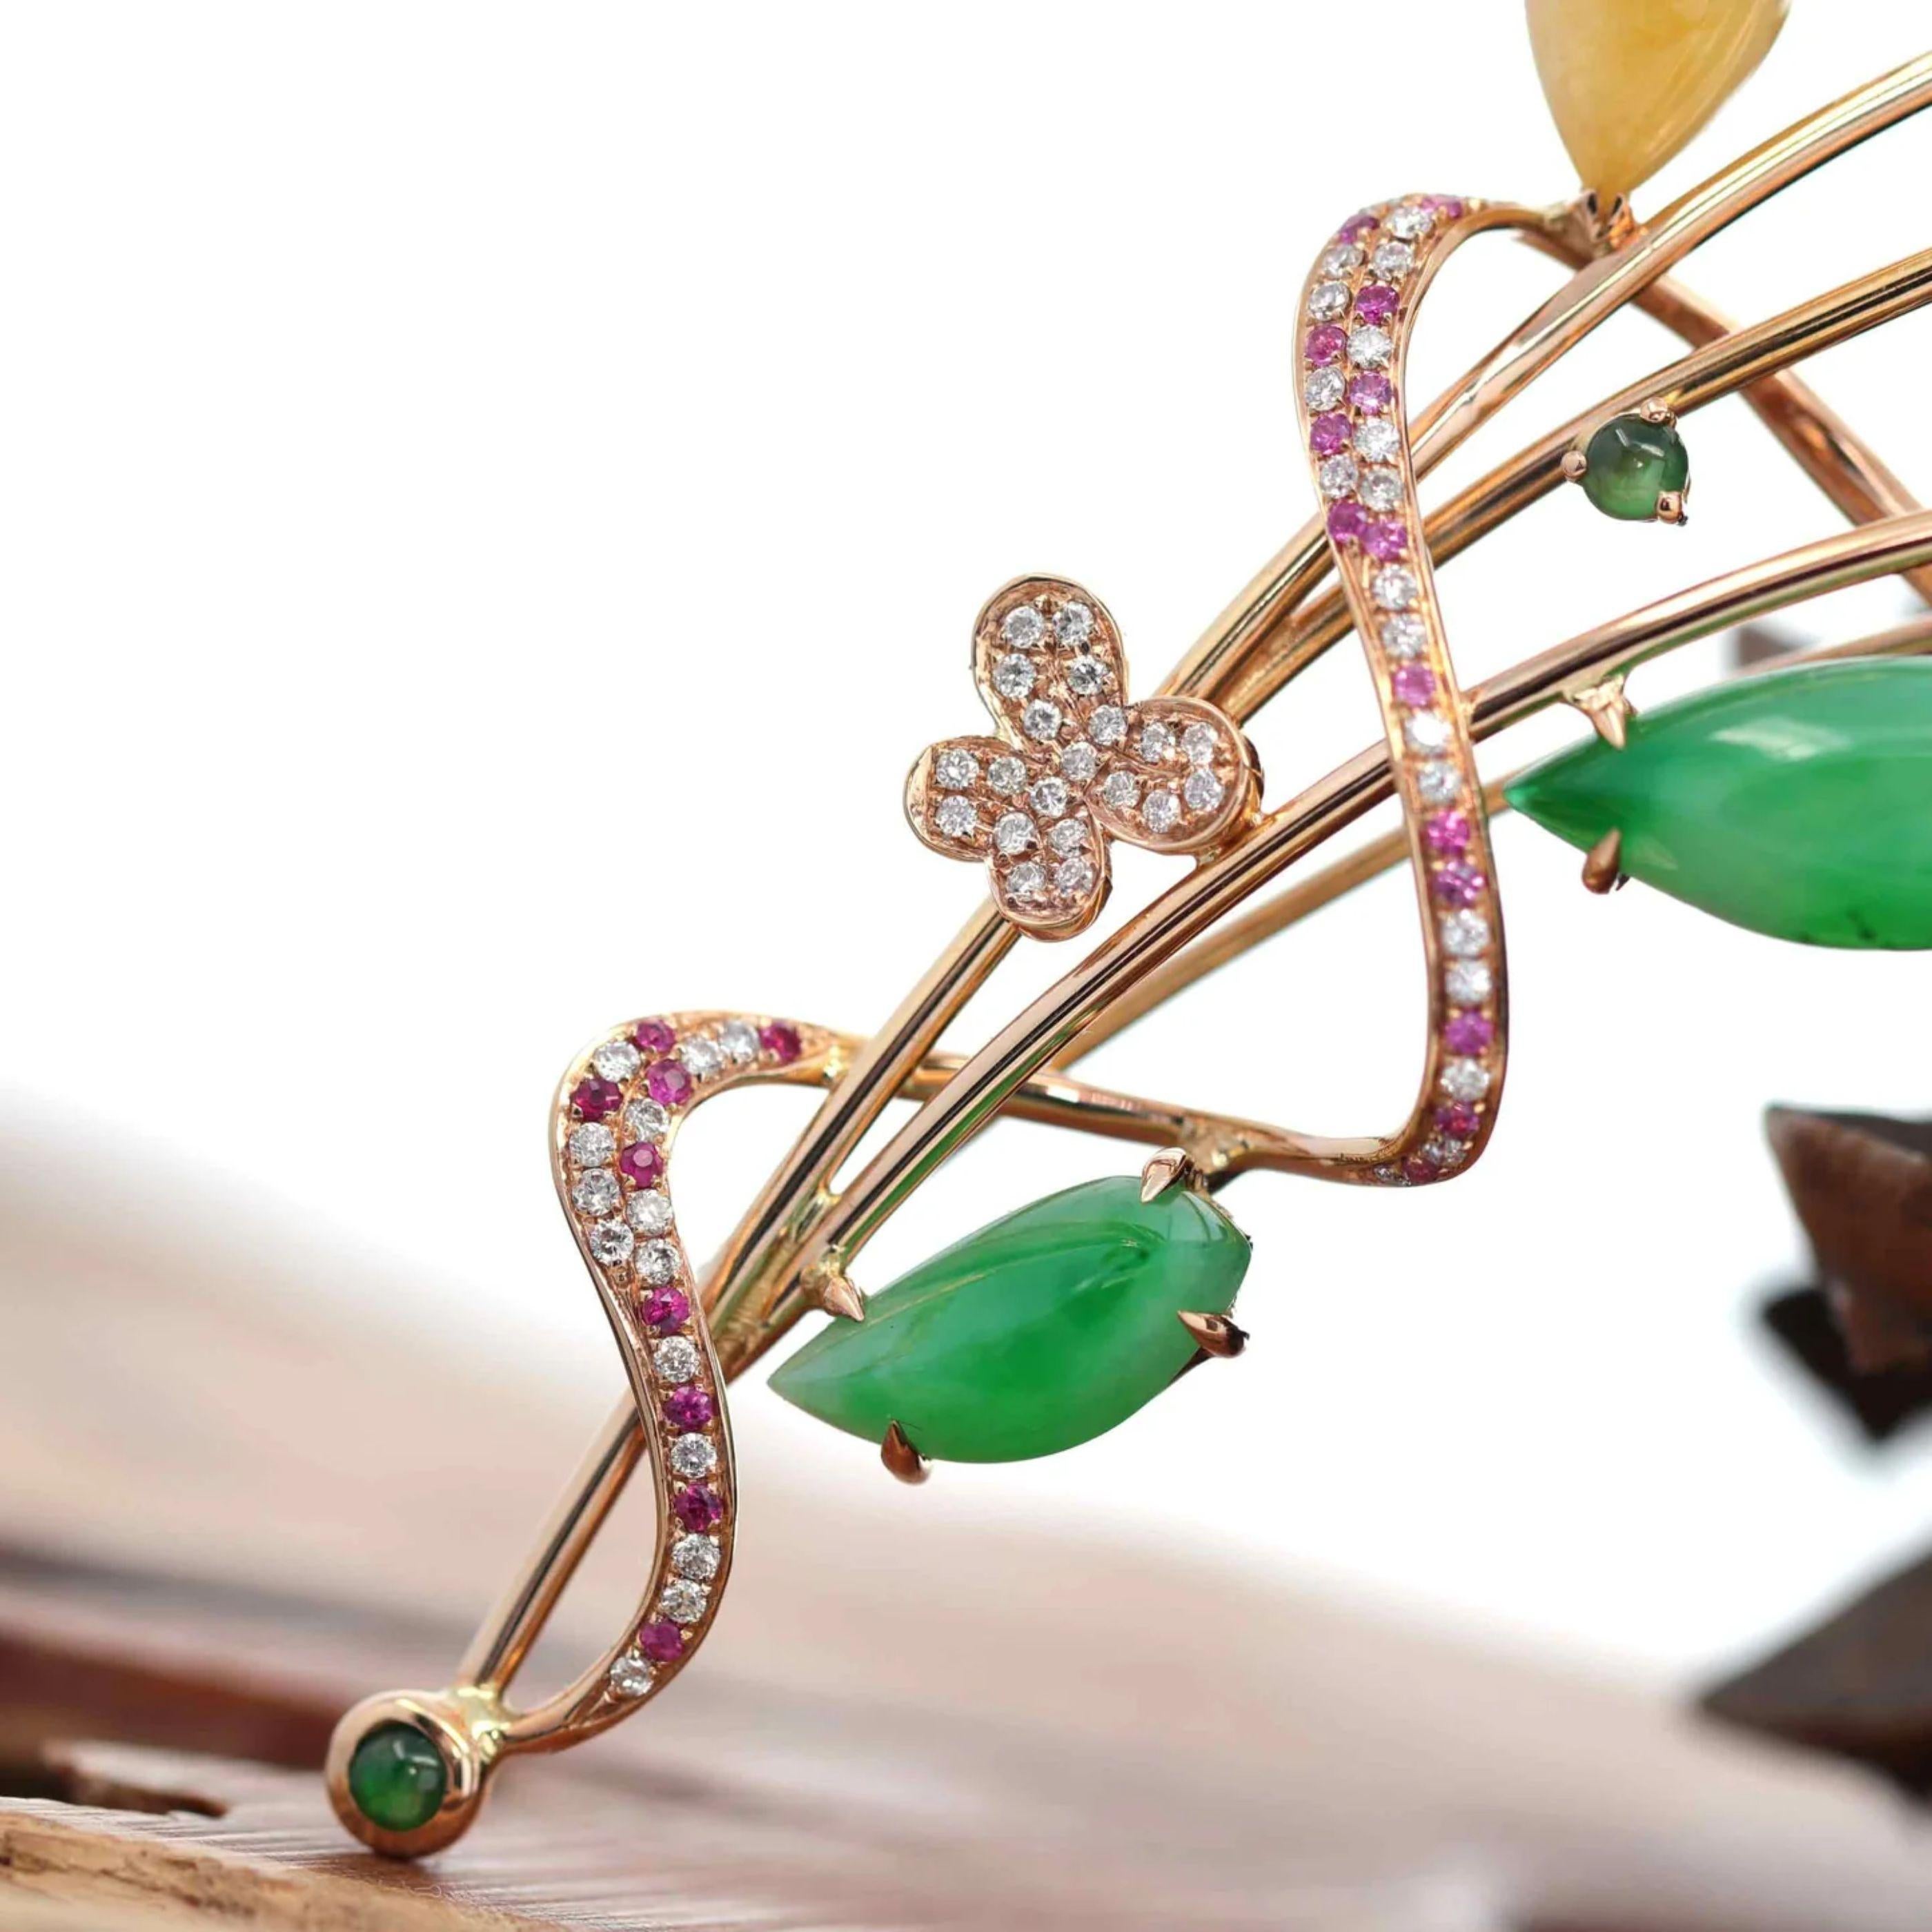 Artist High-End 18k Rose Gold Genuine Imperial Jadeite Jade Pendant & Brooch Diamonds For Sale